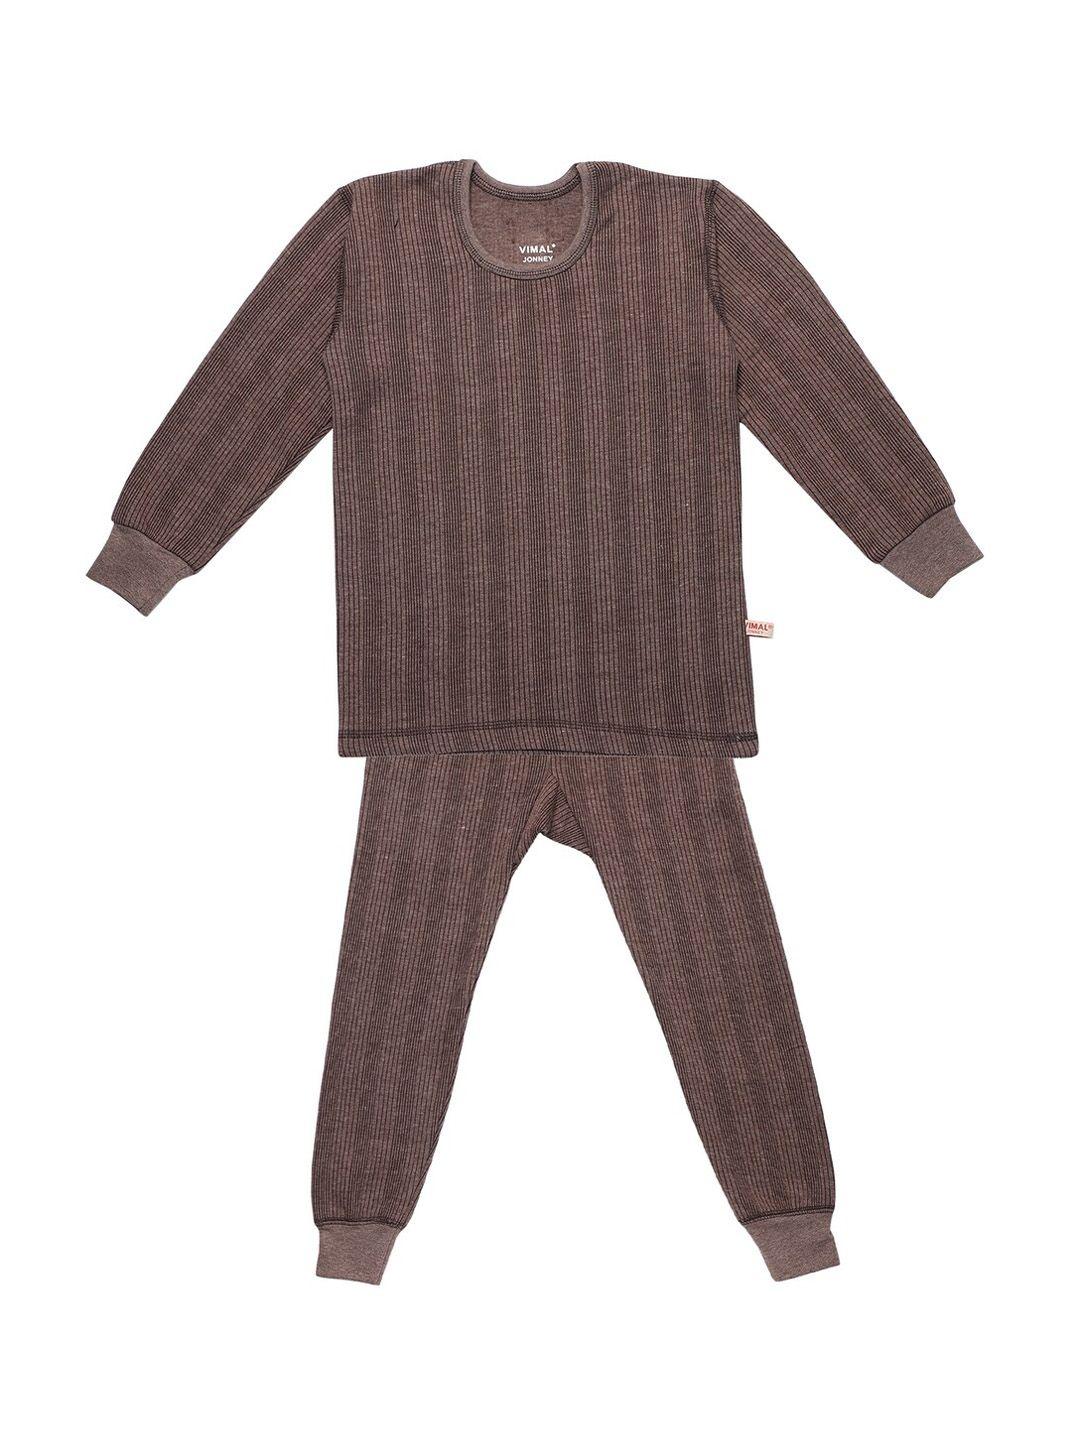 vimal-jonney-kids-brown-striped-thermal-set